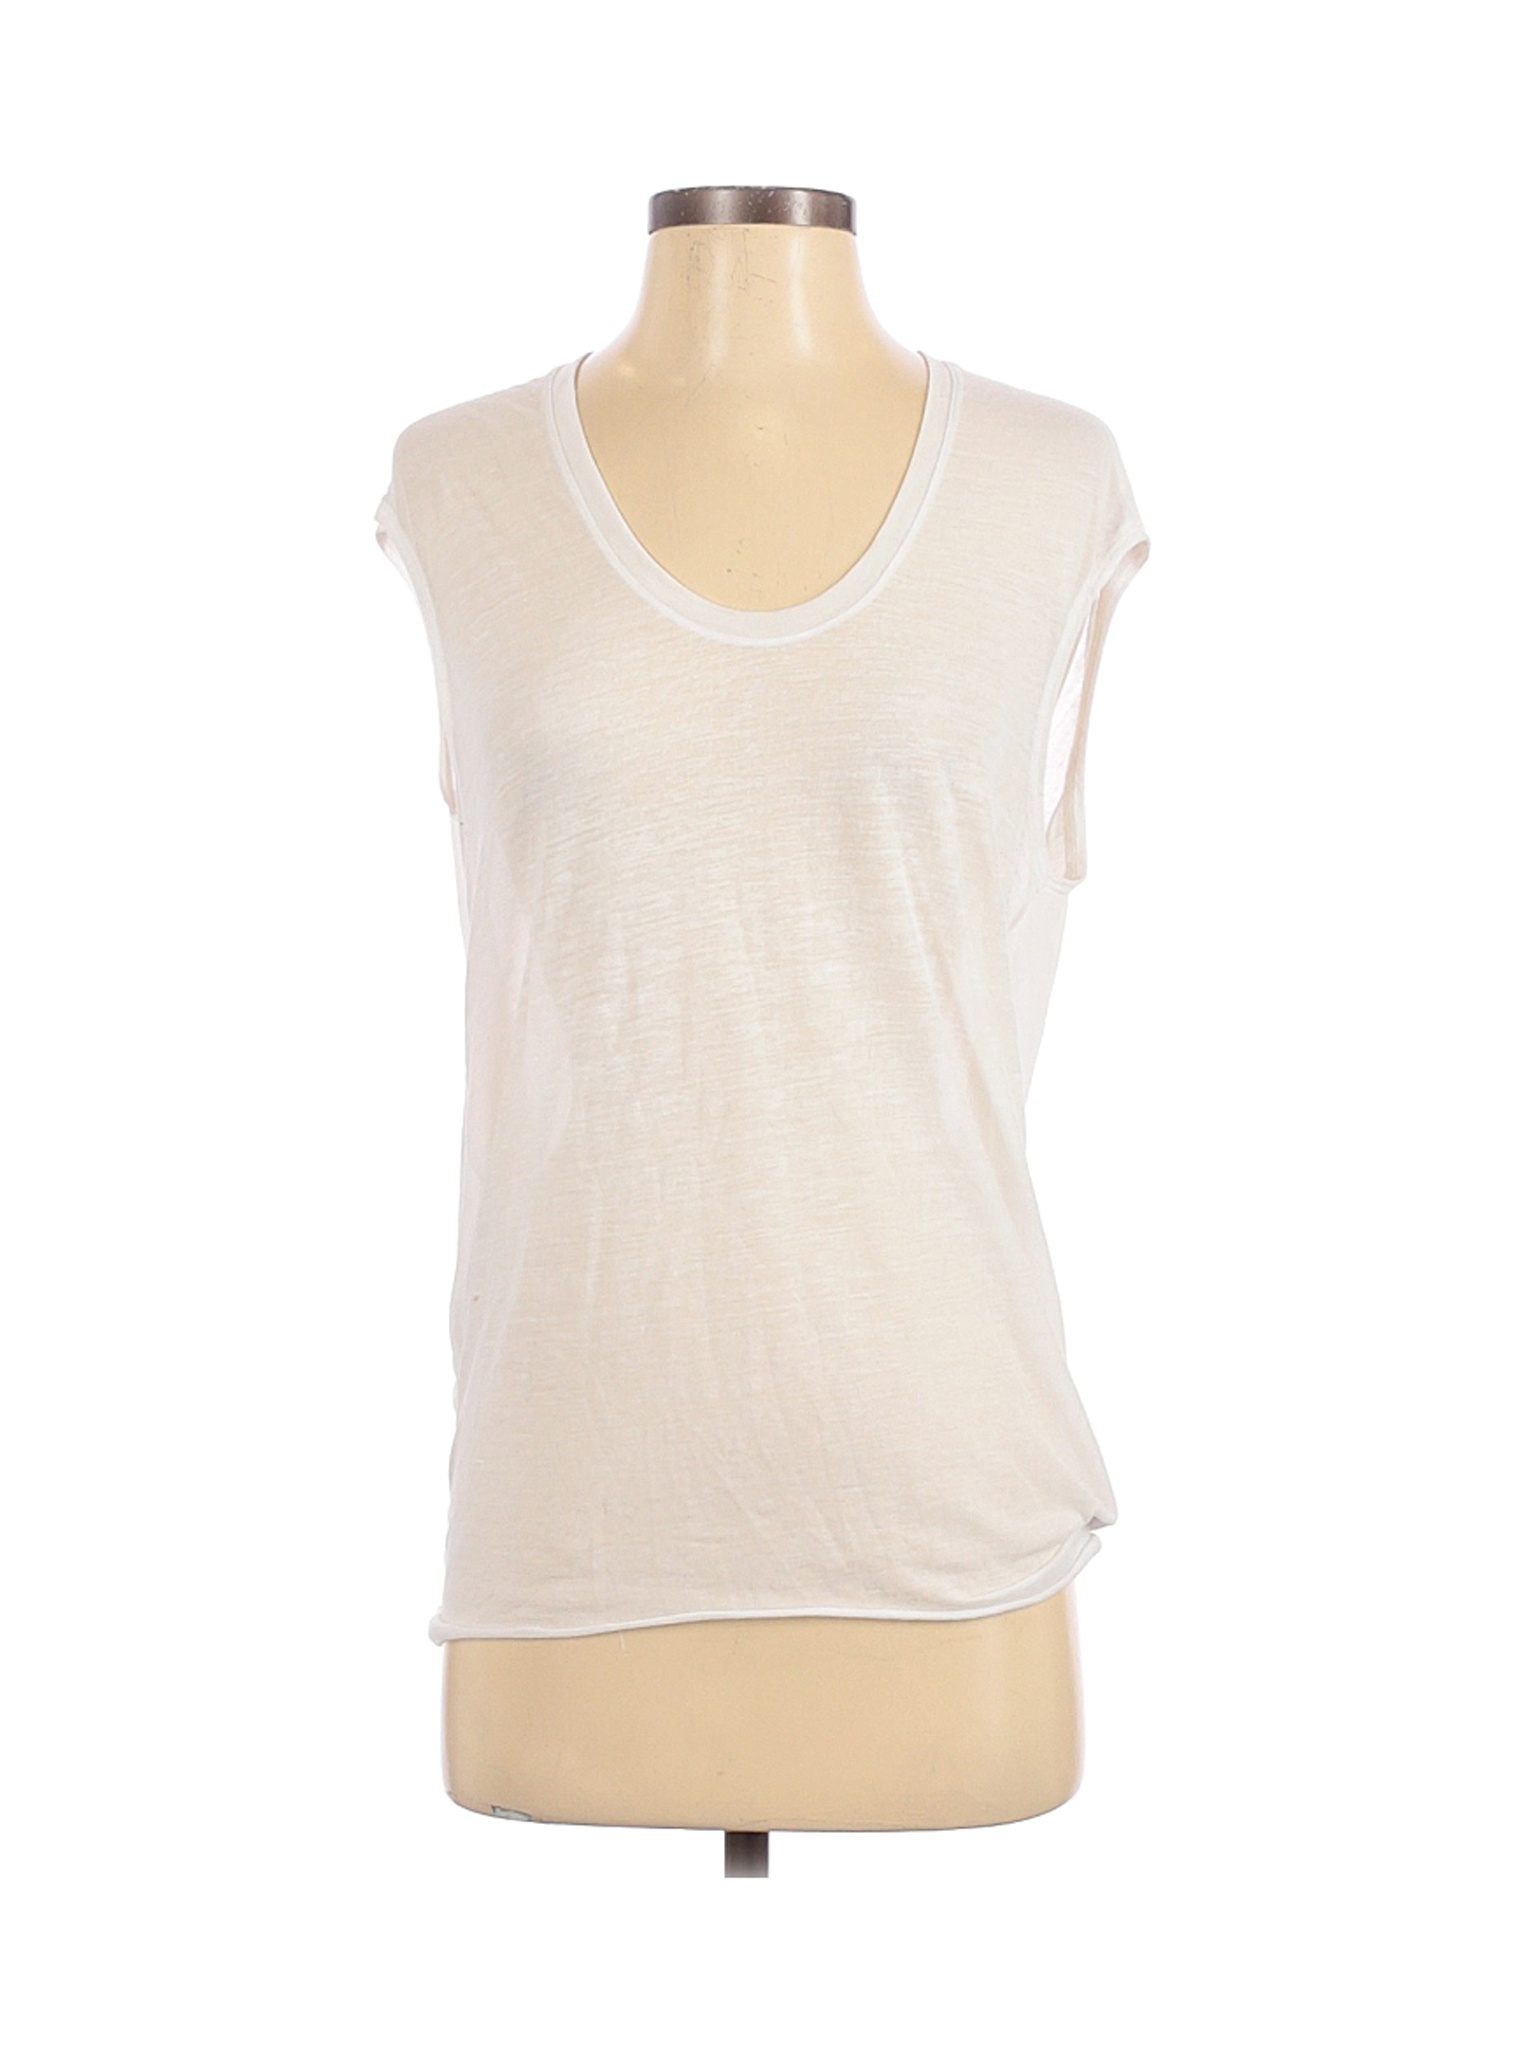 HELMUT Helmut Lang Women Ivory Short Sleeve Top P | eBay